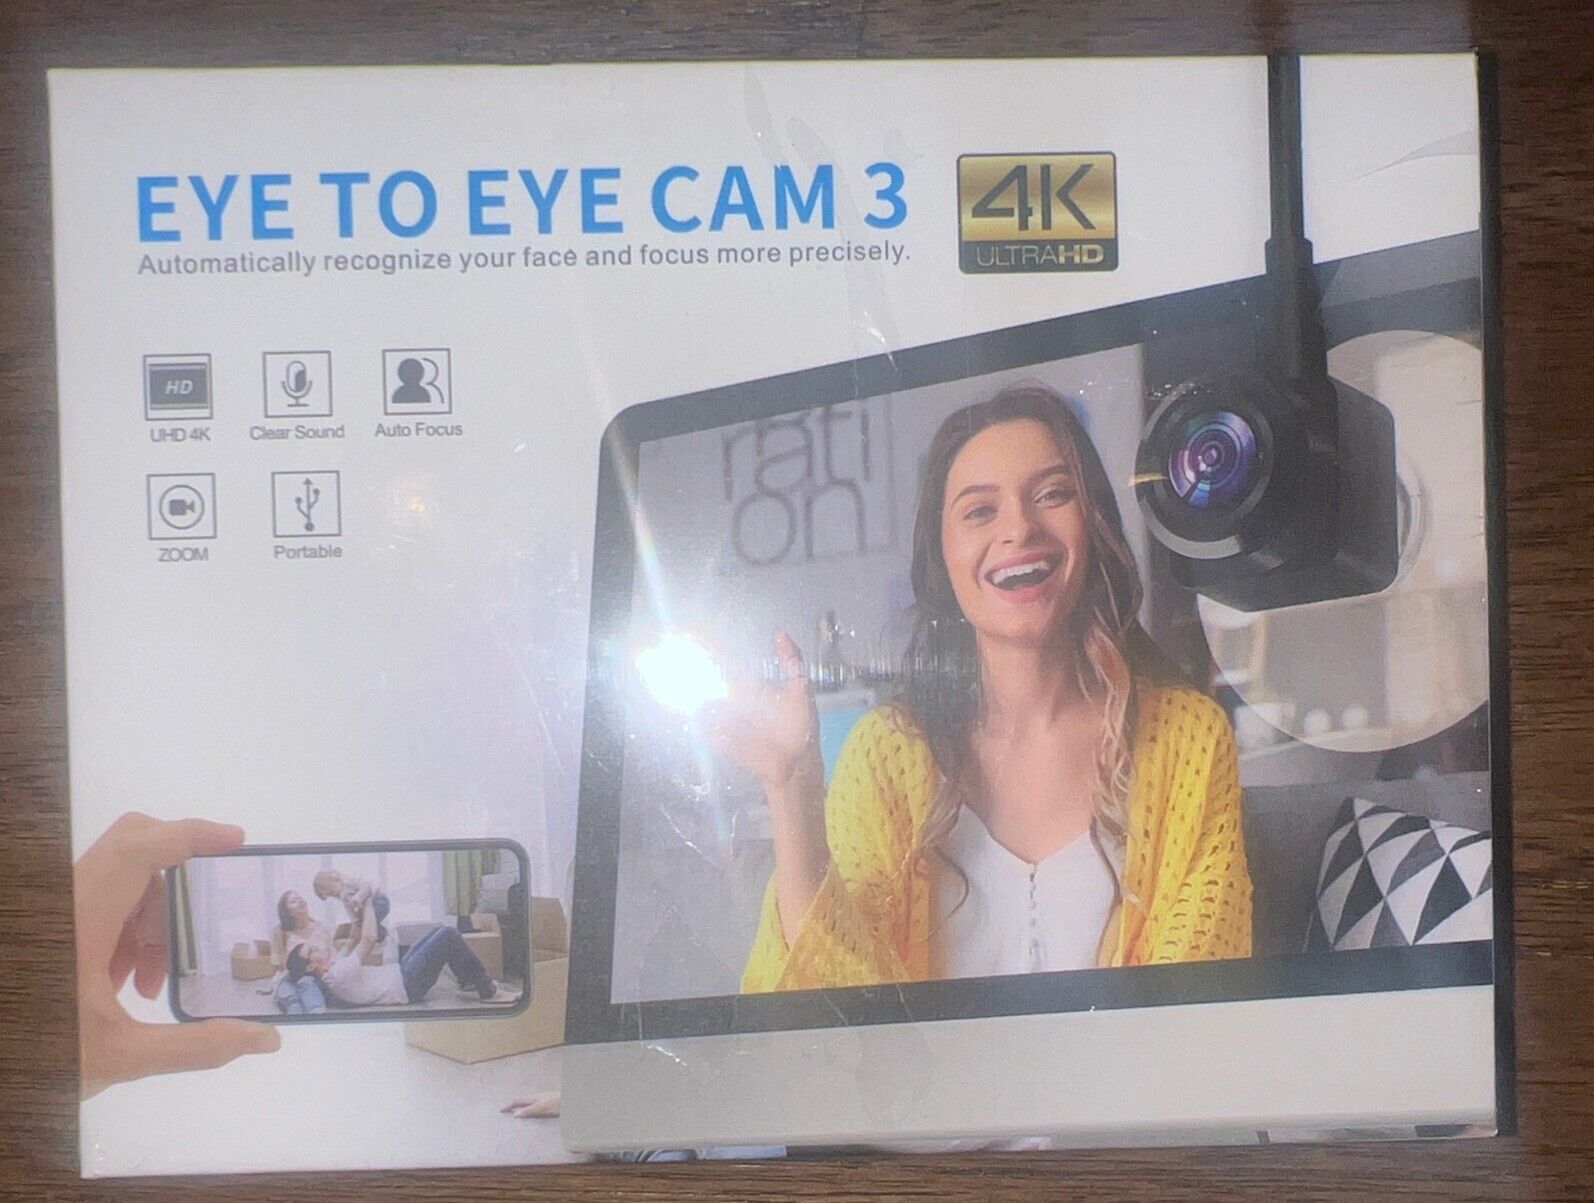 Eye To Eye Cam 3 1080P, 4K UltraHD, Manual Focus- NEW